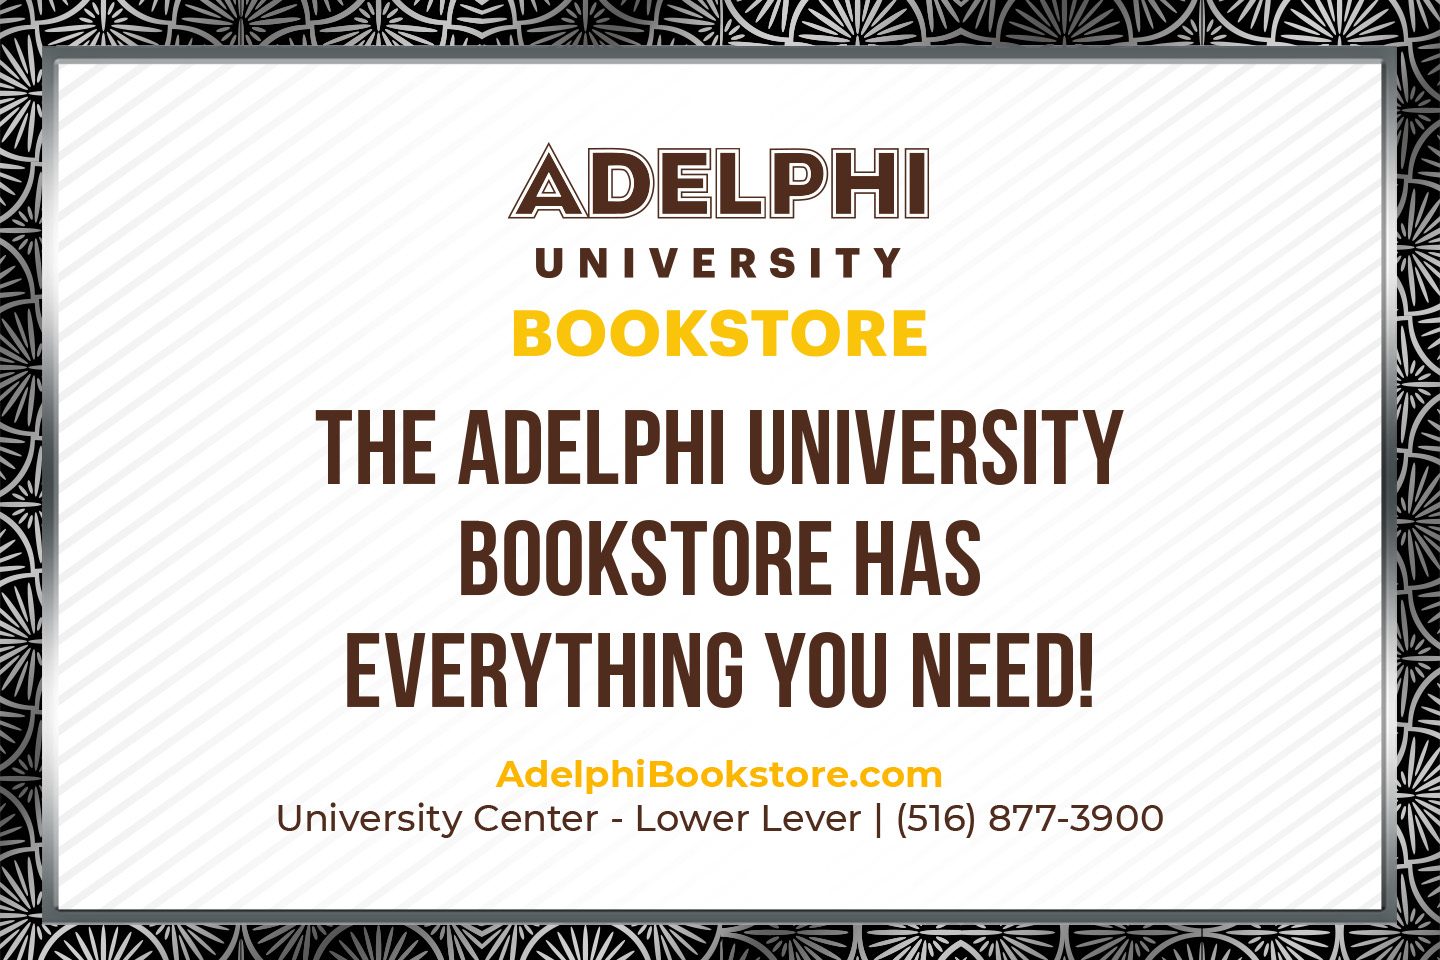 The Adelphi University Bookstore has everything you need!